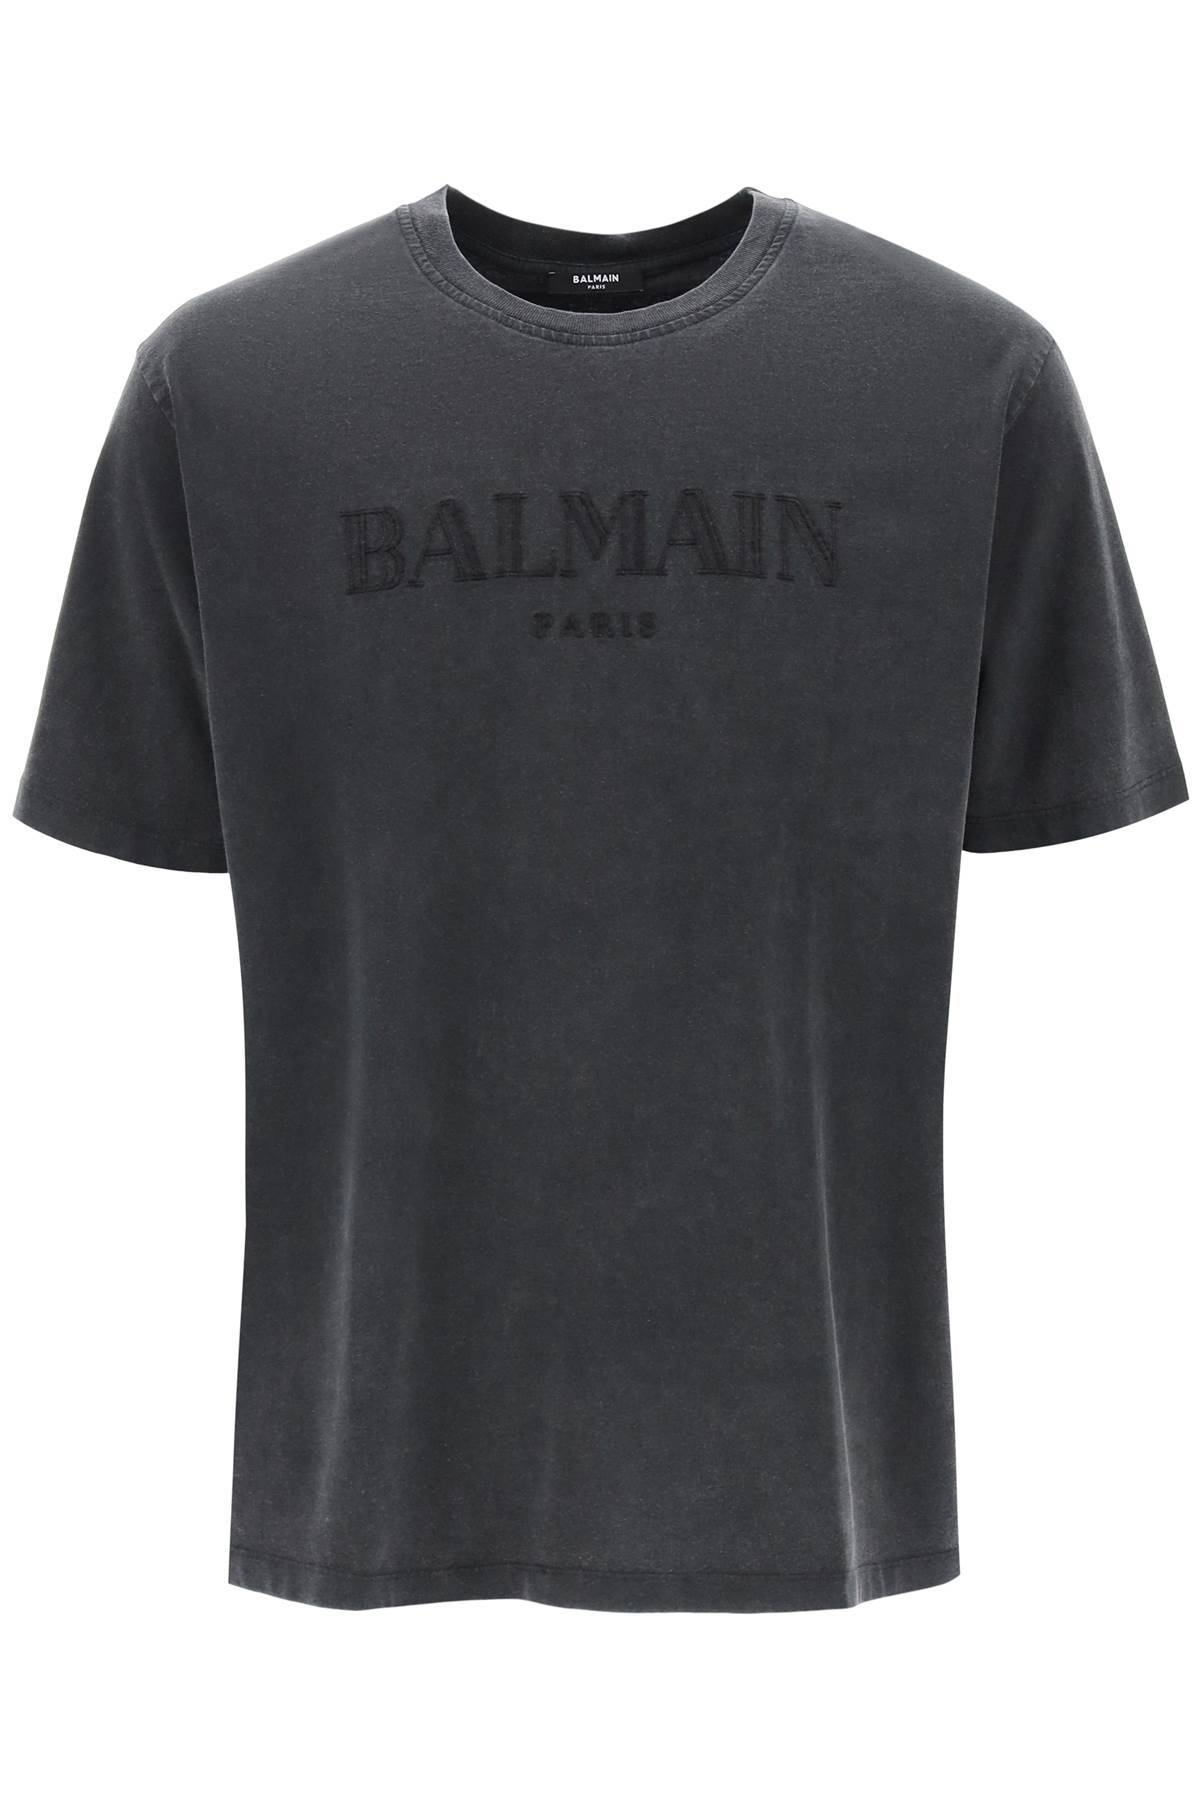 Balmain BALMAIN vintage balmain t-shirt